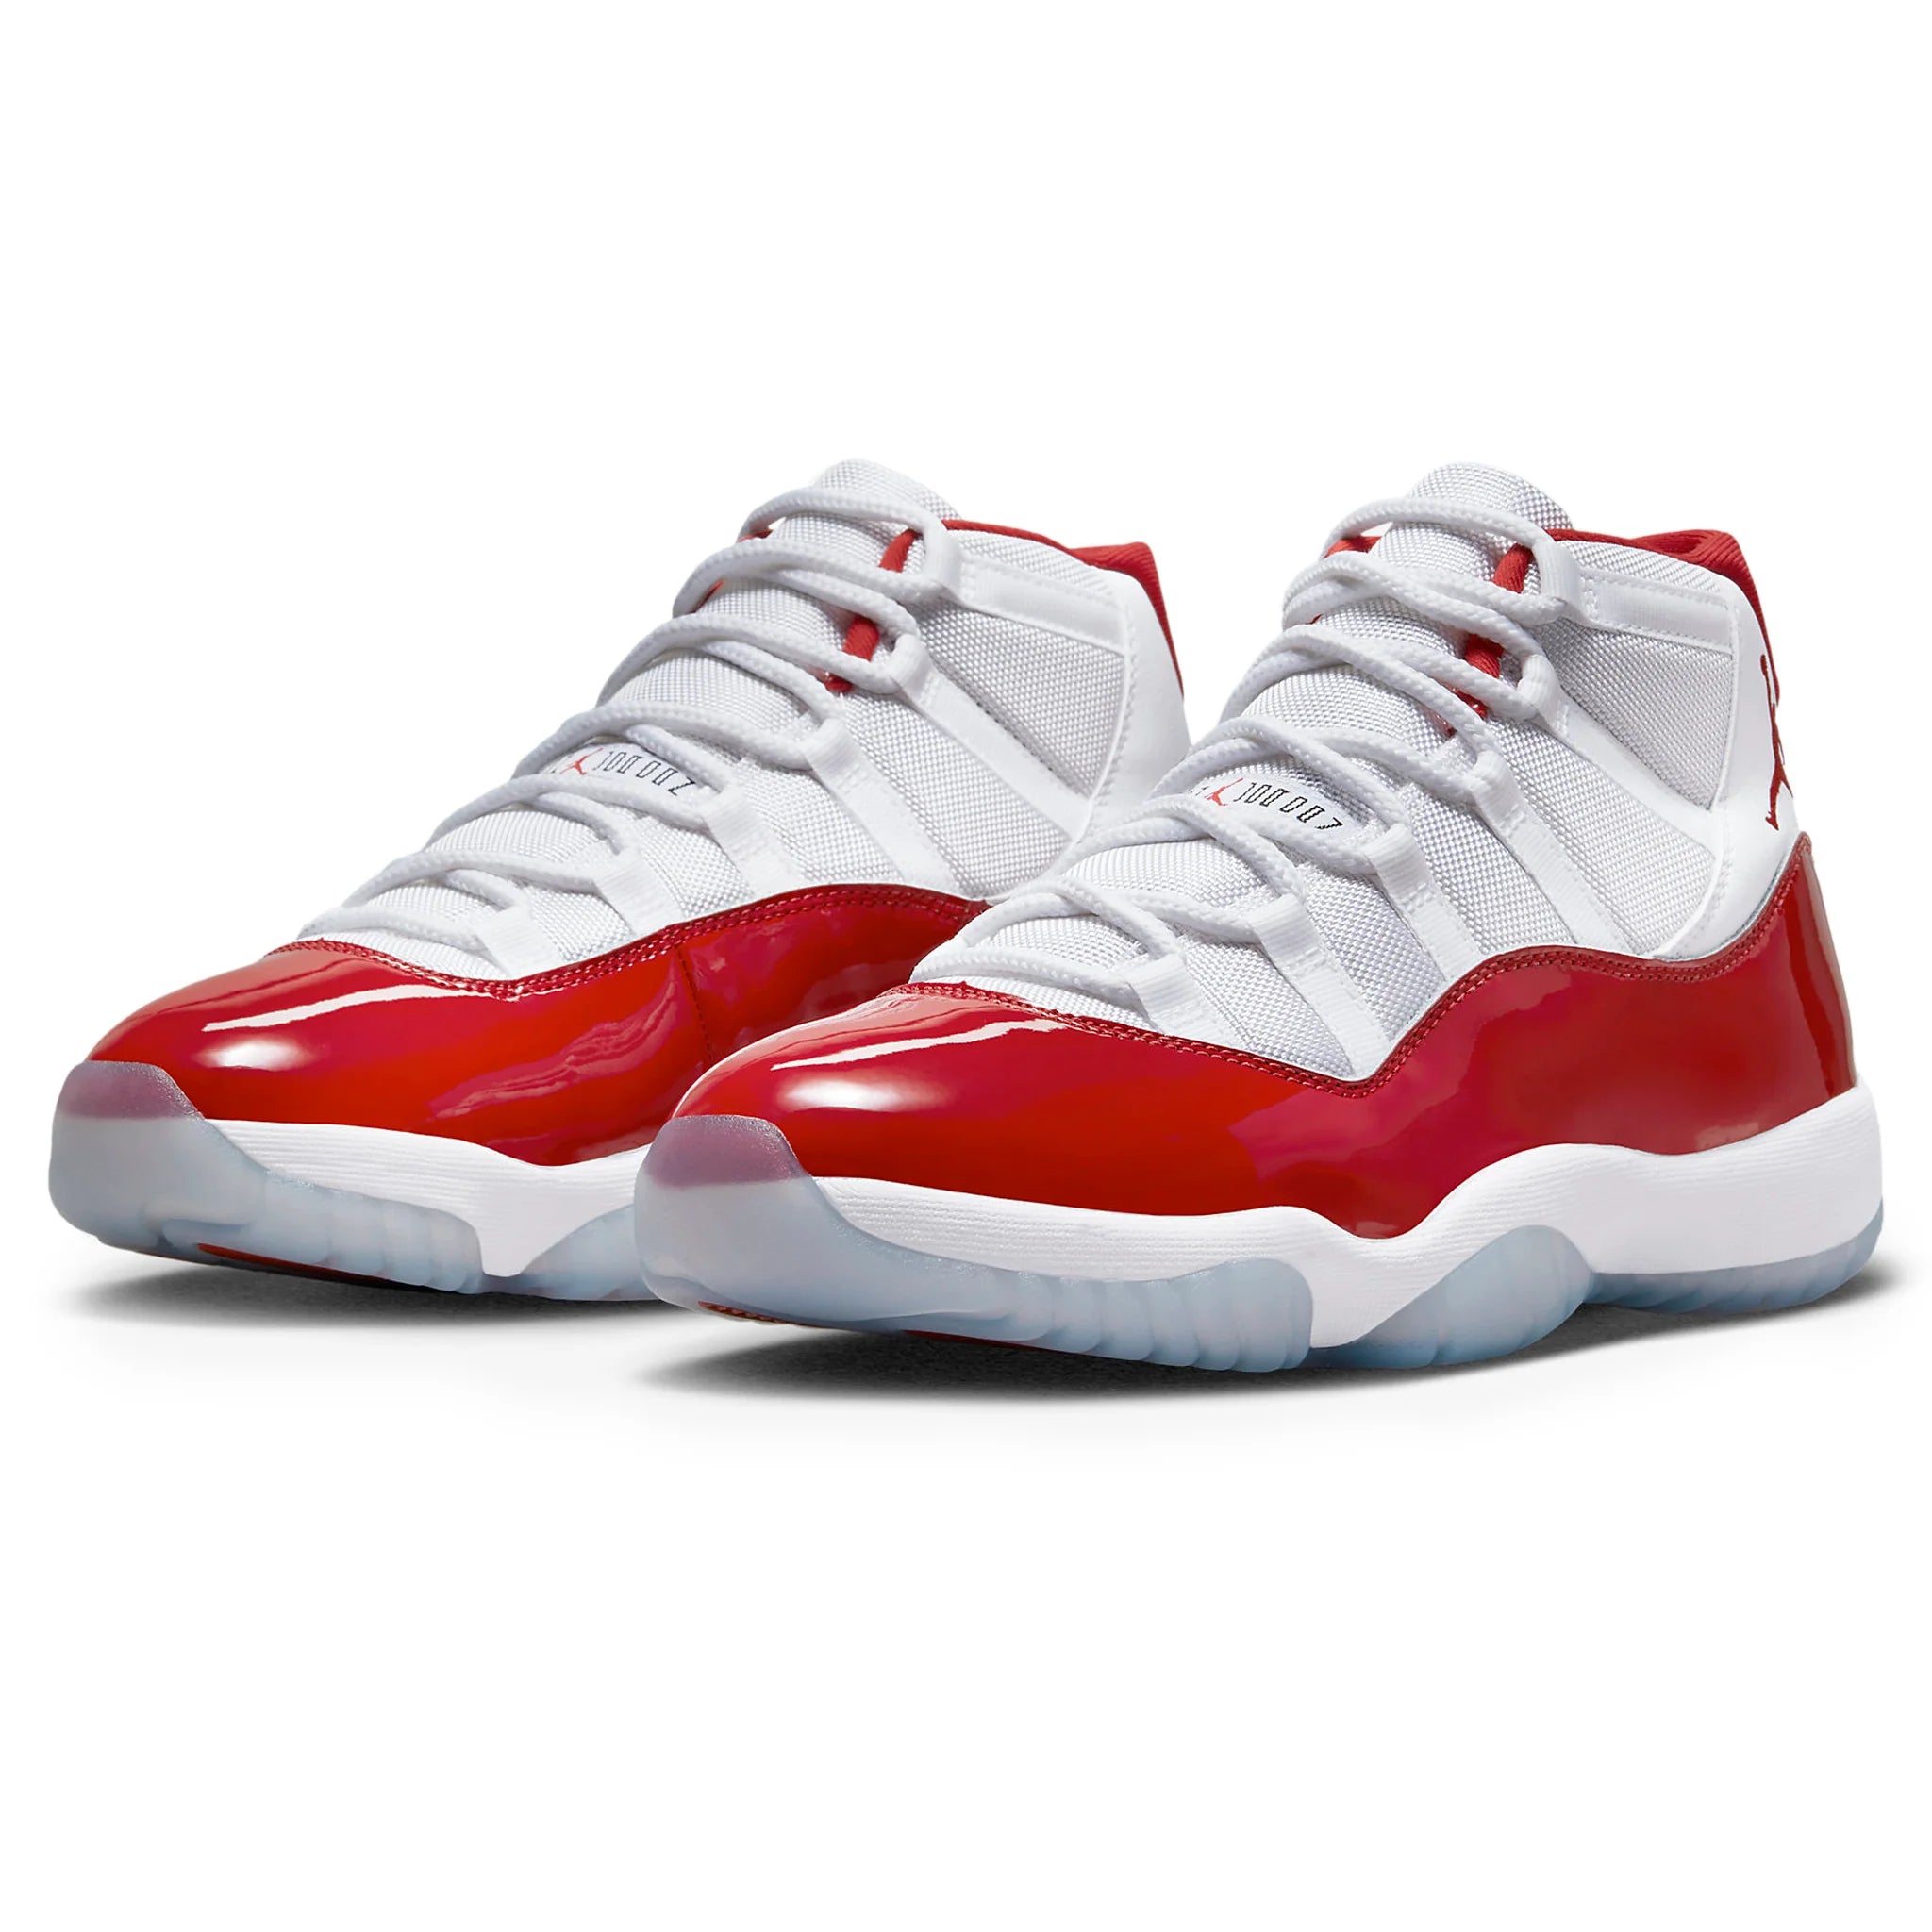 Nike Air Jordan 11 "Cherry" 